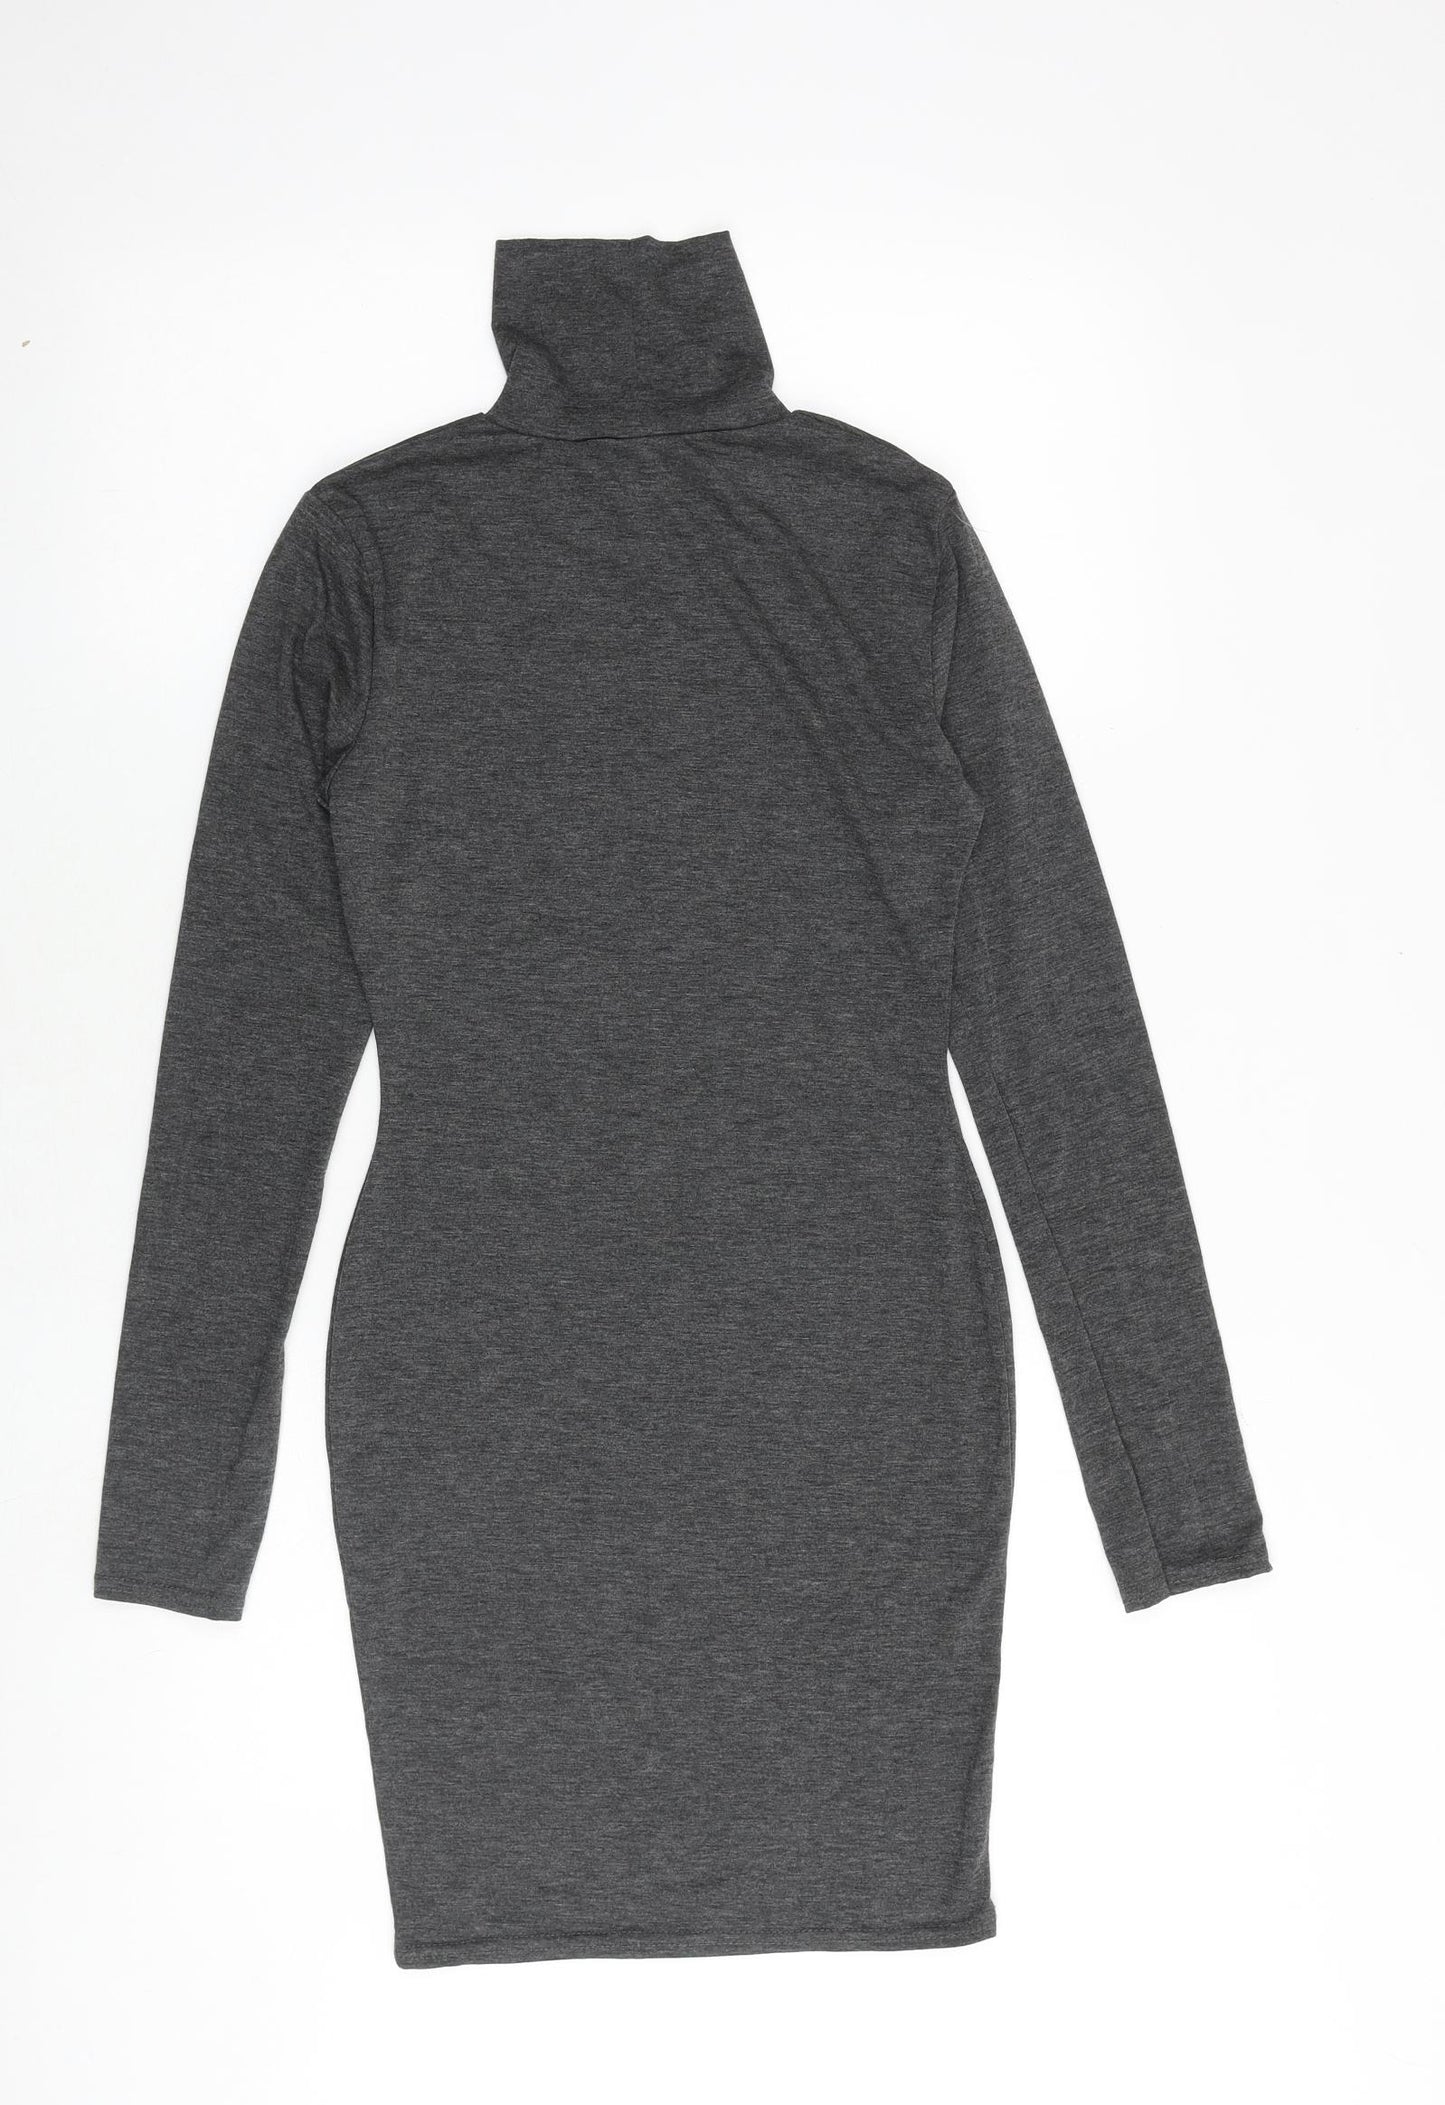 Boohoo Womens Grey Viscose Jumper Dress Size 10 High Neck Pullover